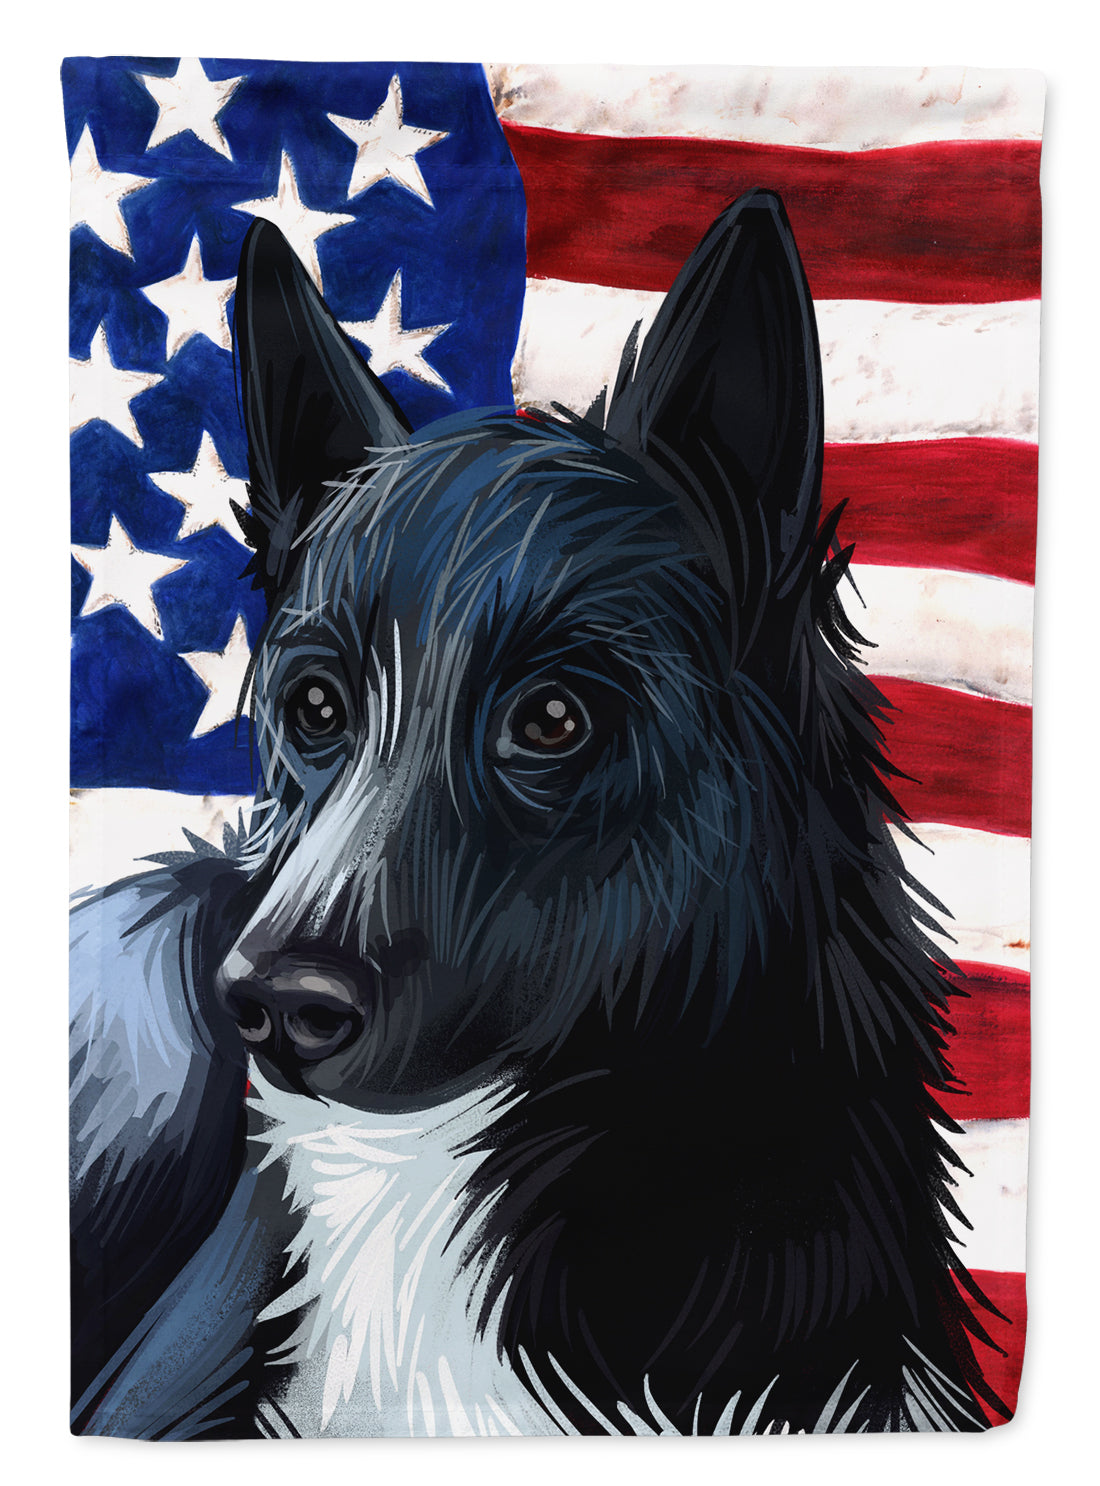 Russo-European Laika Dog American Flag Flag Garden Size CK6681GF  the-store.com.